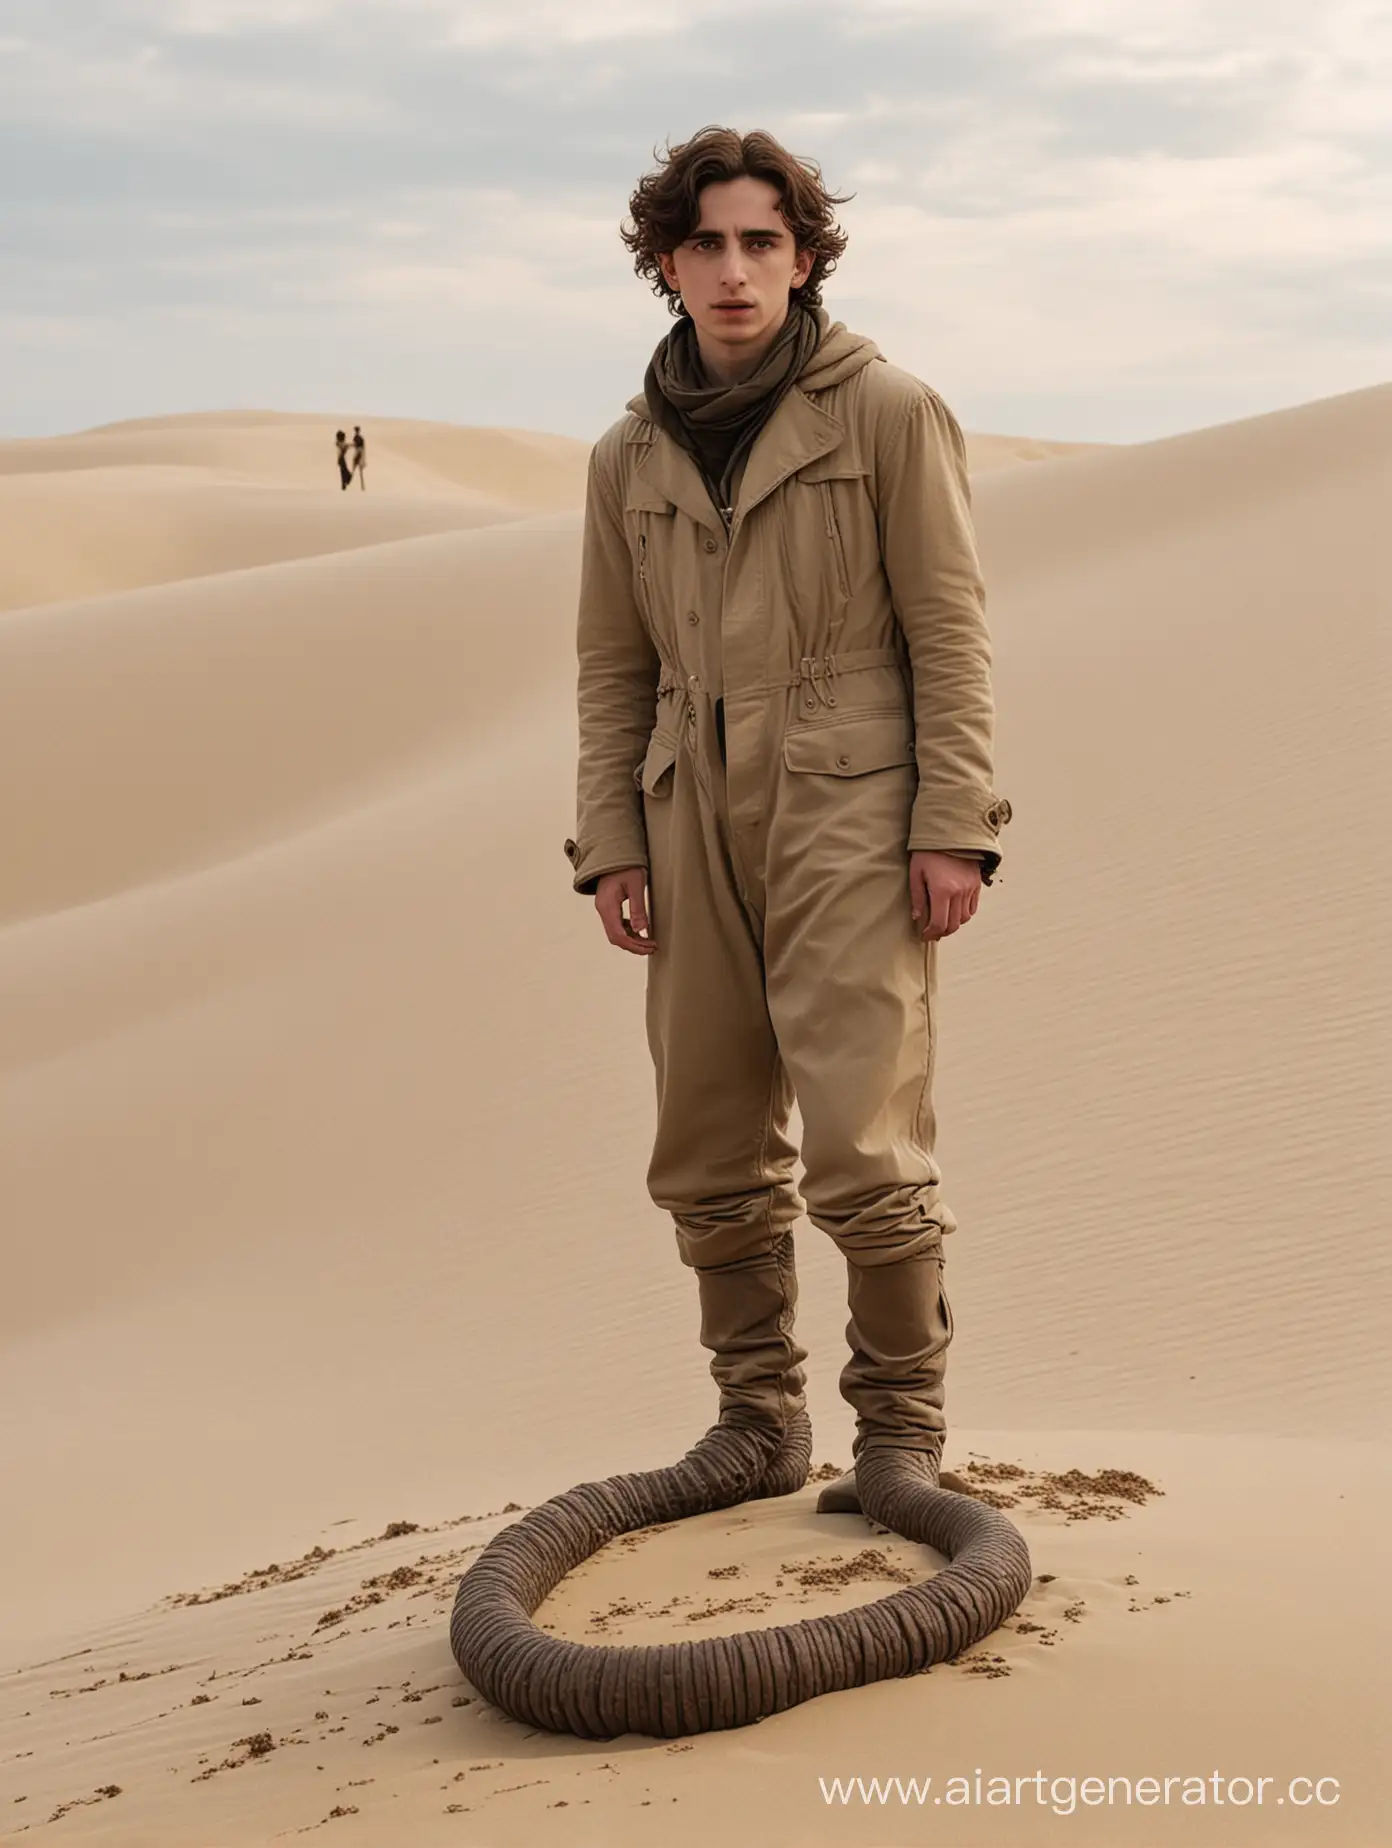 Timothe-Chalamet-Standing-in-Desert-Sands-with-Giant-Worm